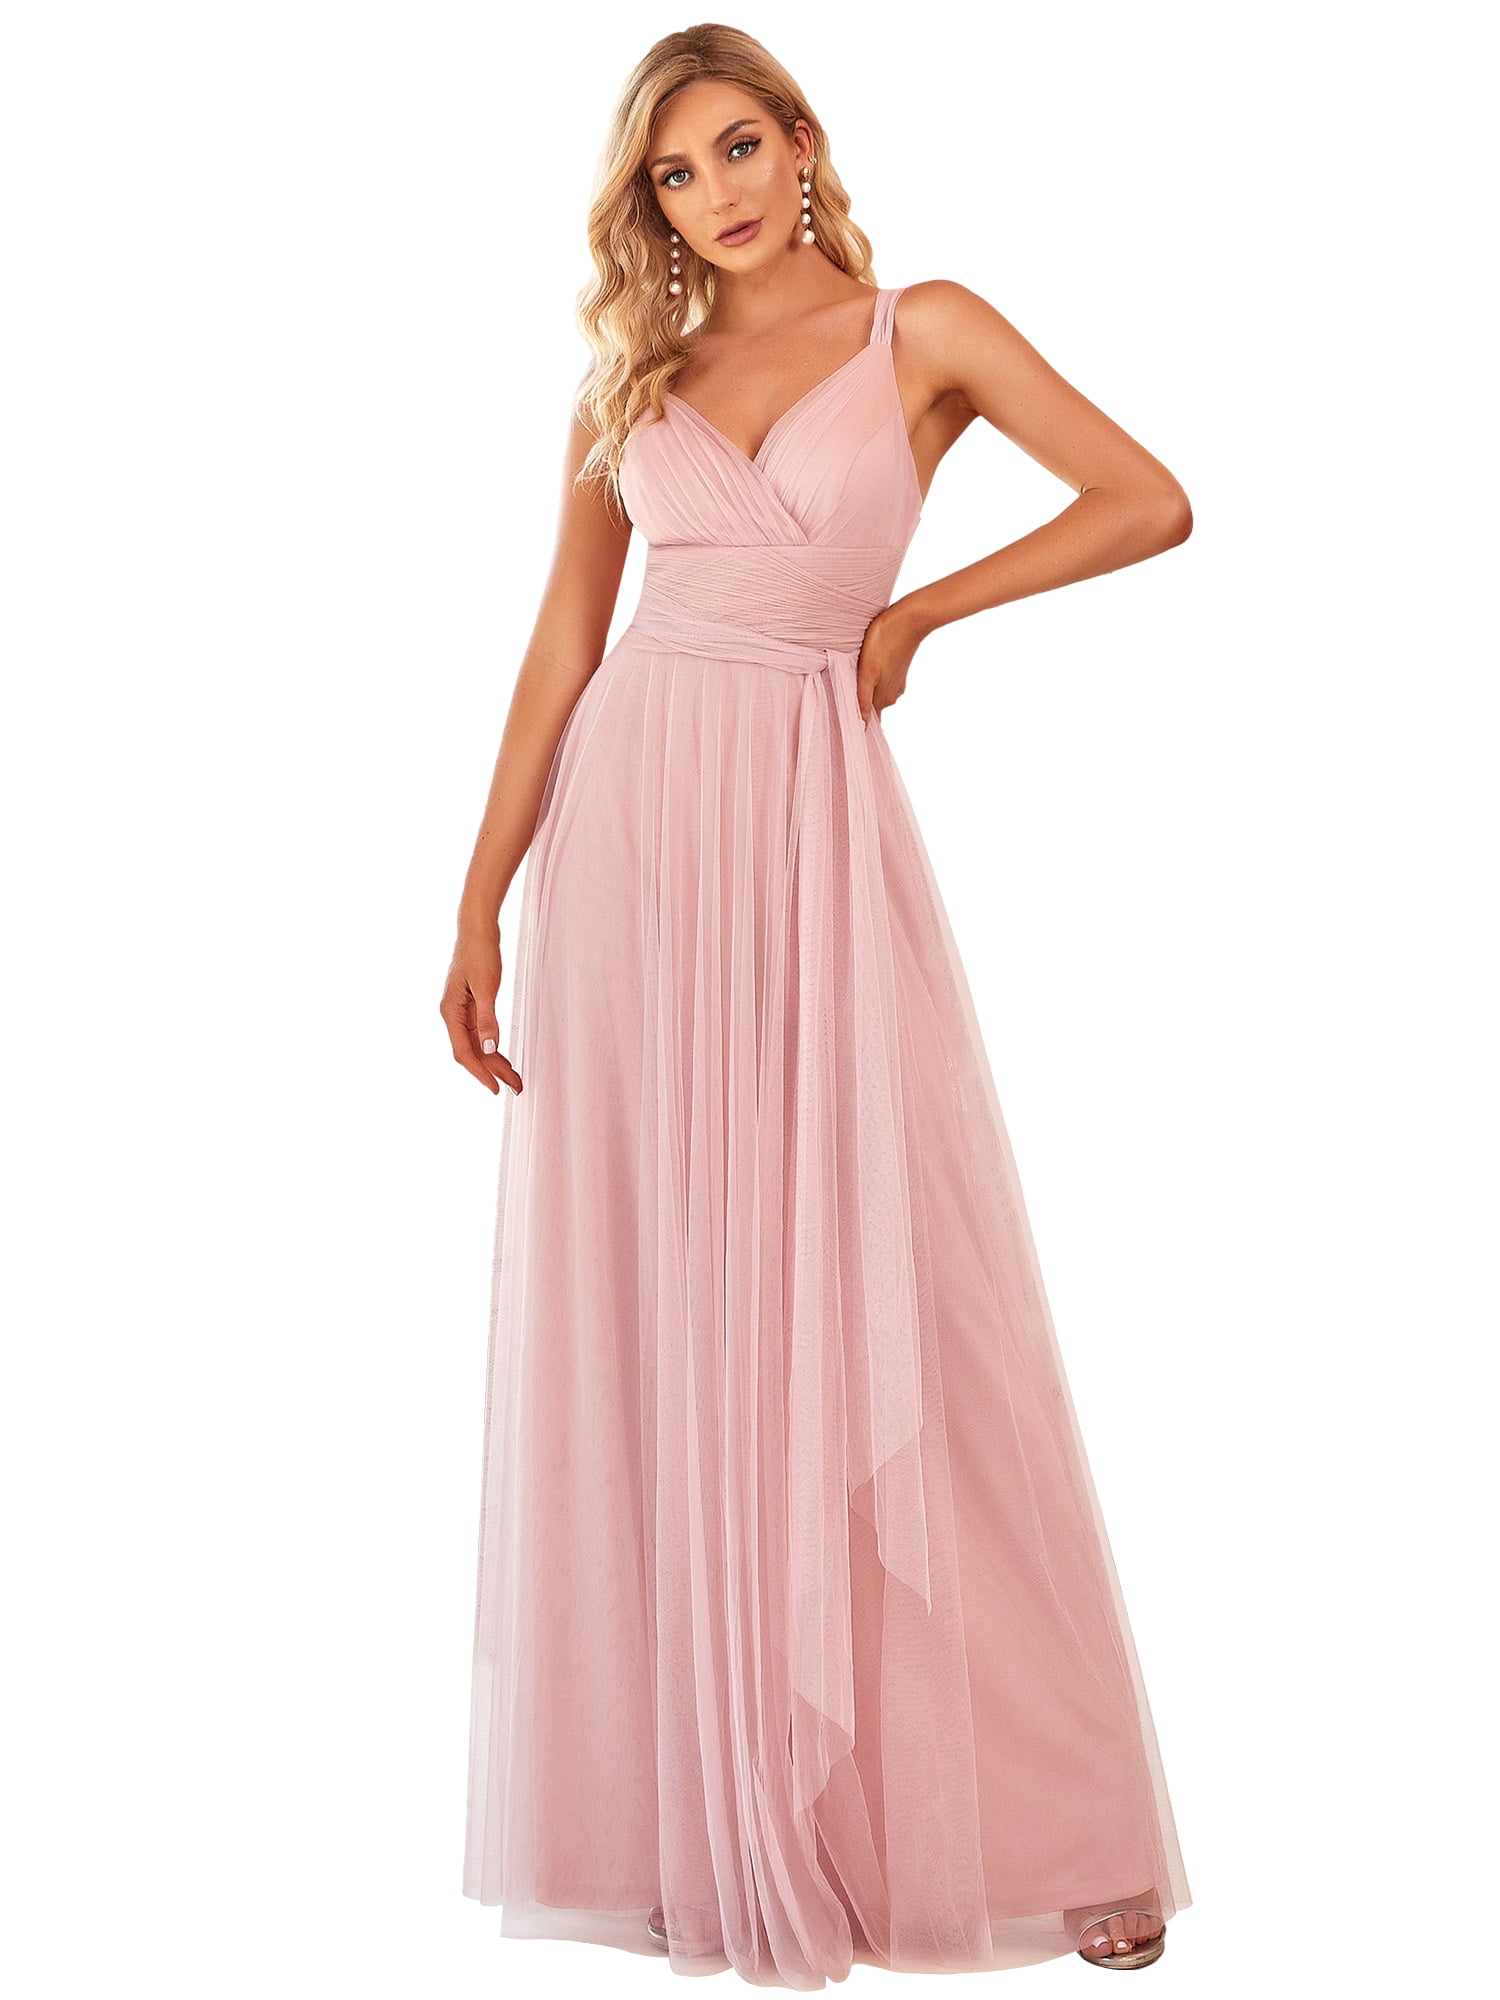 Women Pink Lace Cap Sleeve Evening Gown Bridesmaid A-Line Chiffon Dress S,M,L,XL 